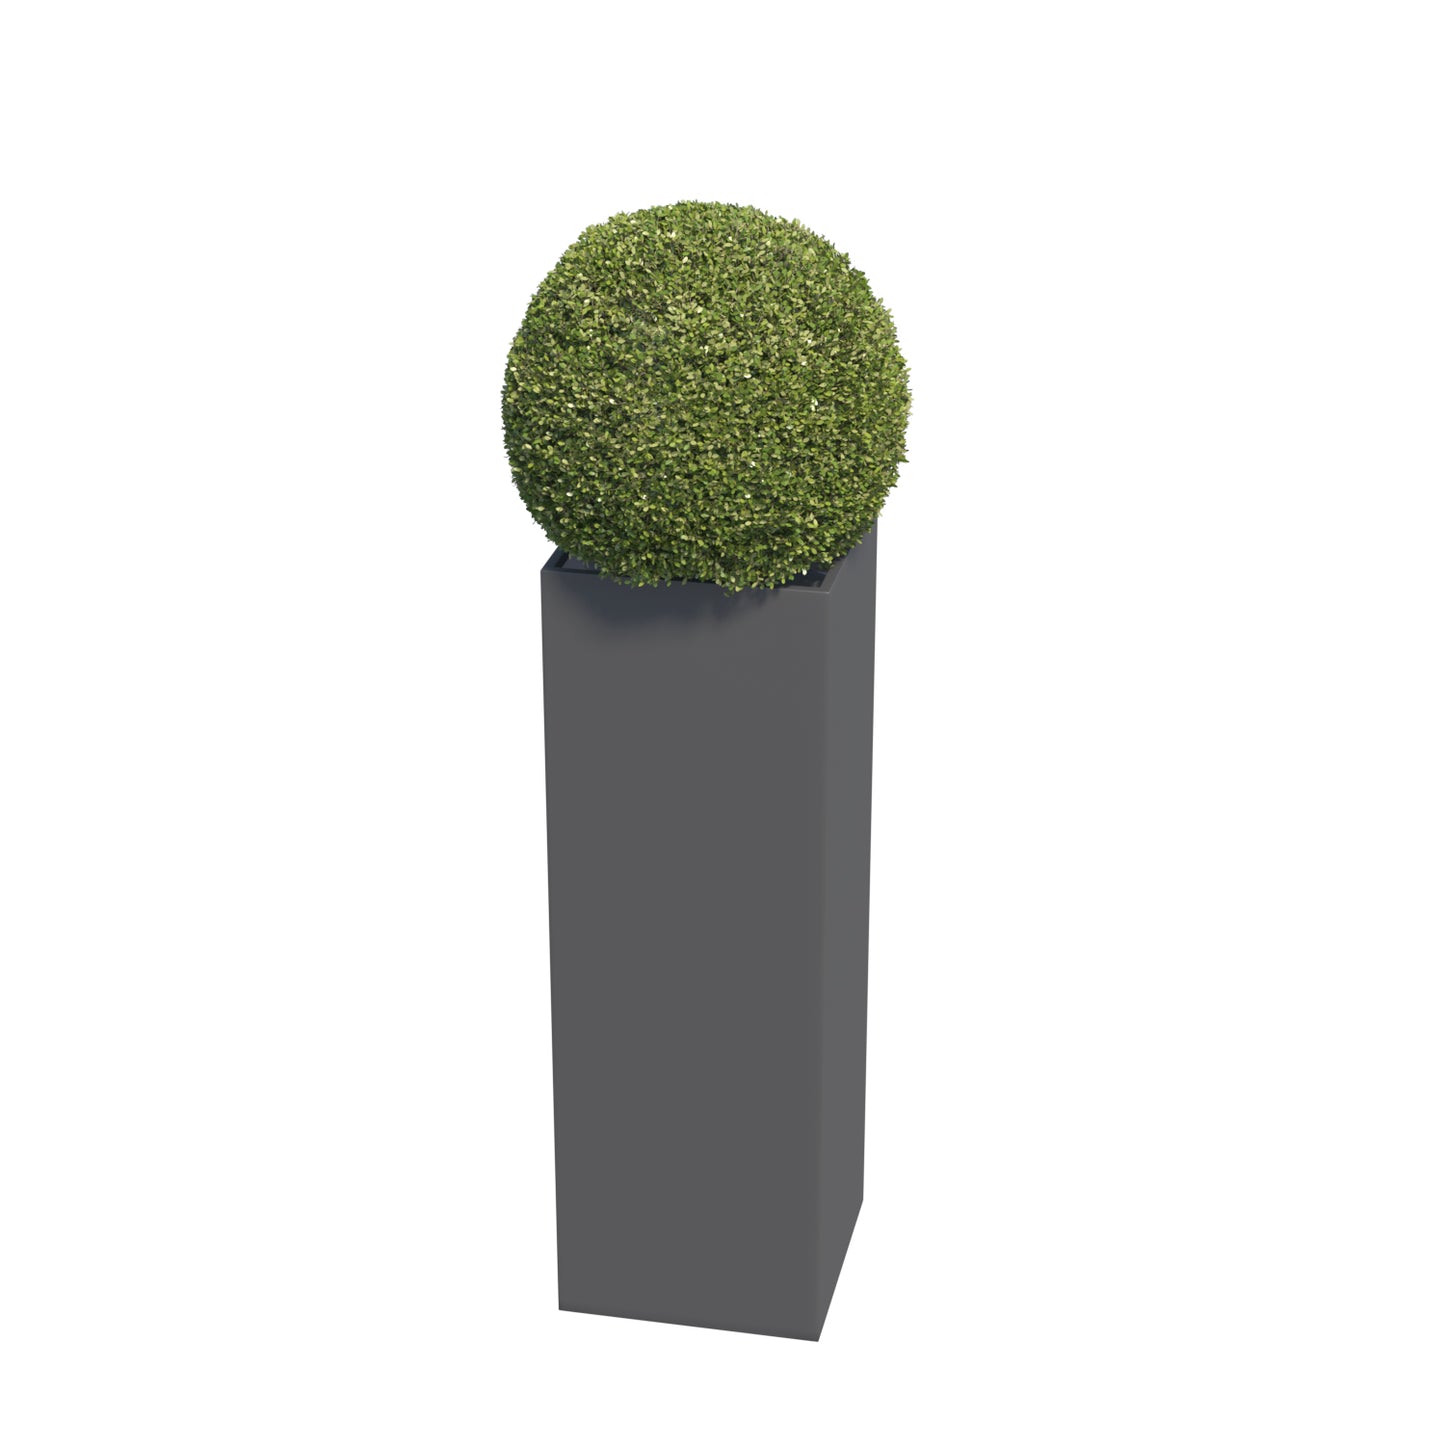 SKINNY PILLAR - Contemporary, designer planter in anthracite